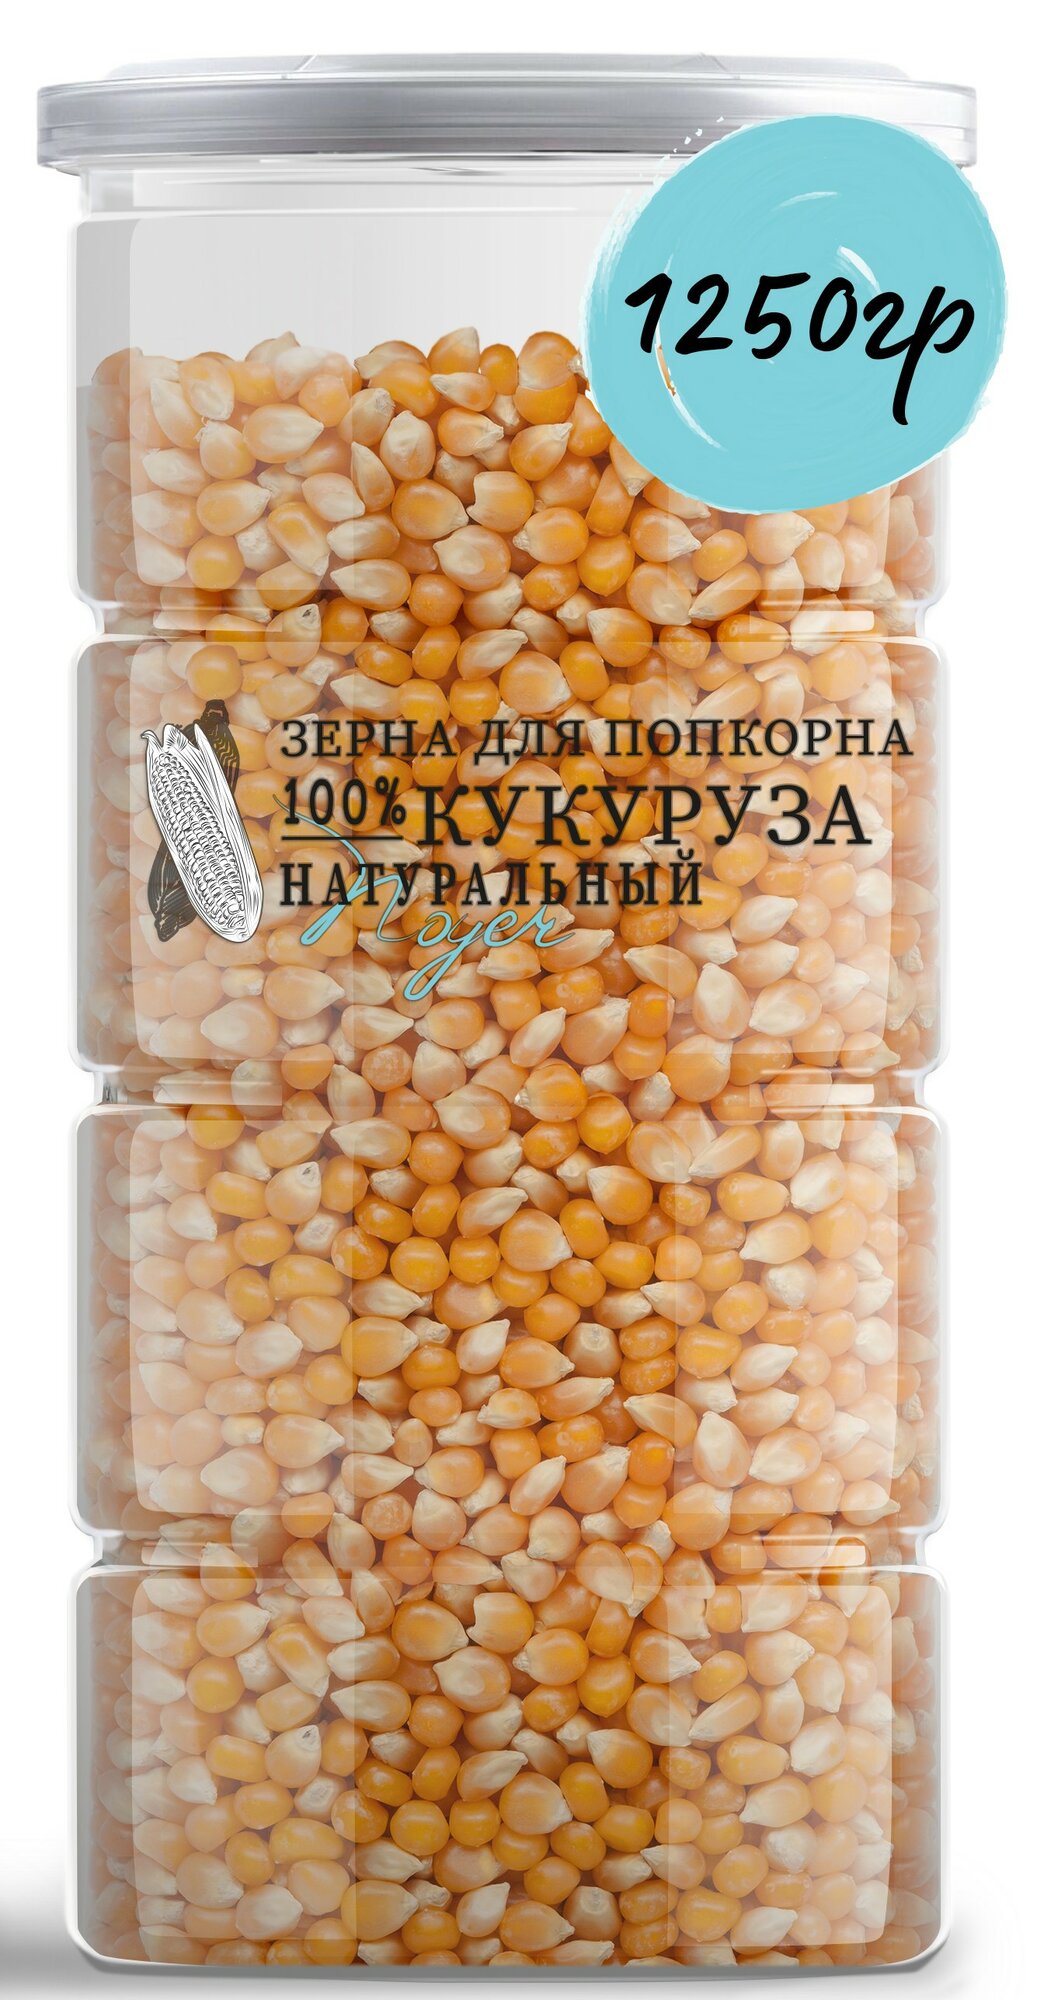 Кукуруза для попкорна, NOYER, 1250 гр.